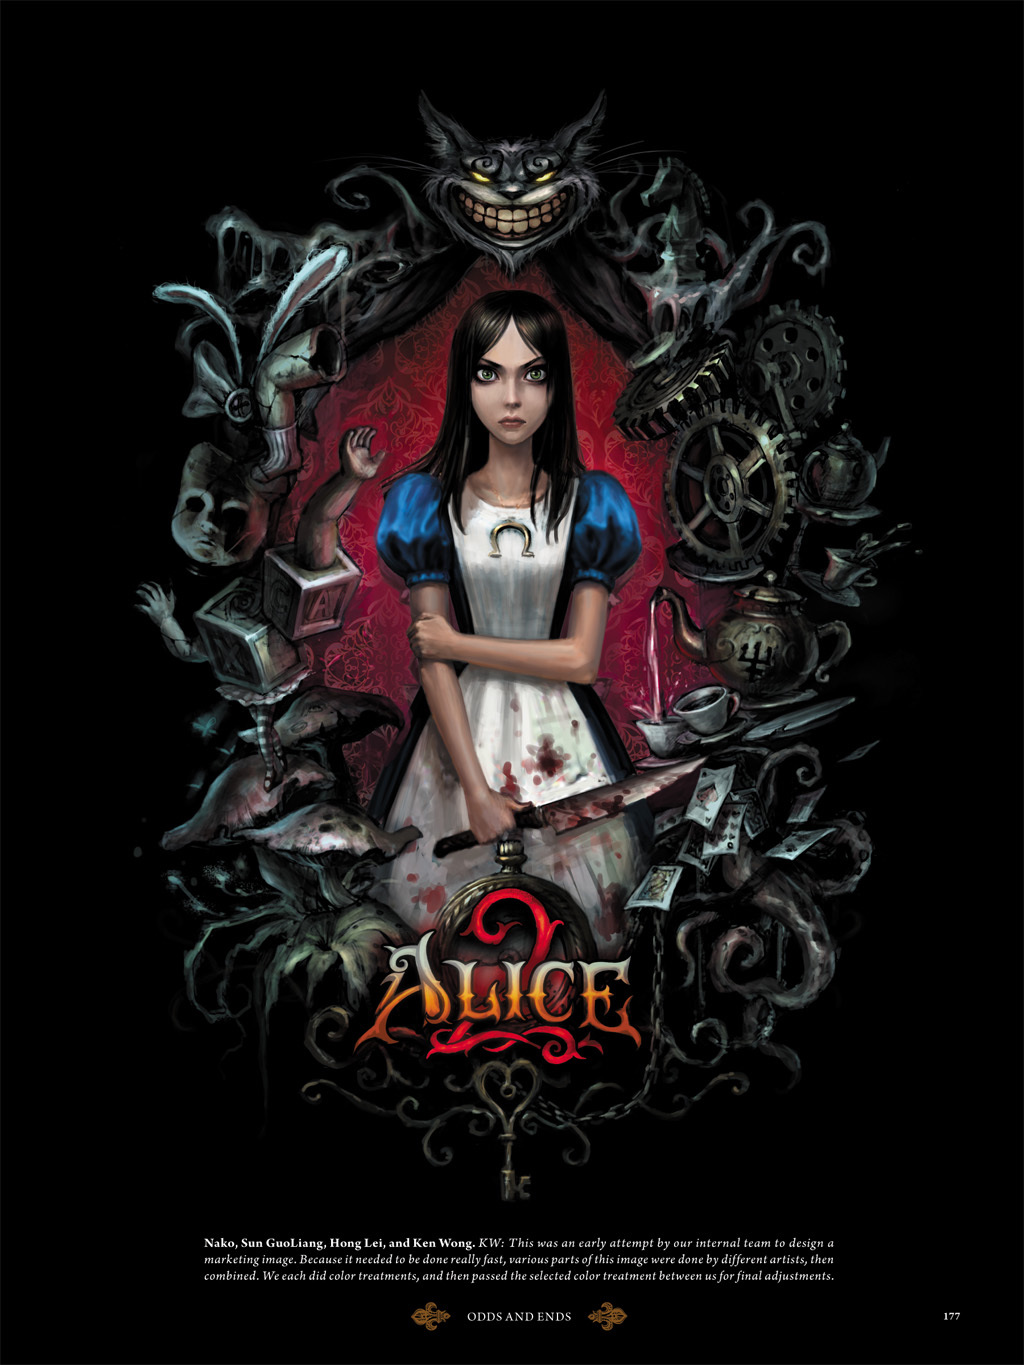 4k Alice: Madness Returns Photos